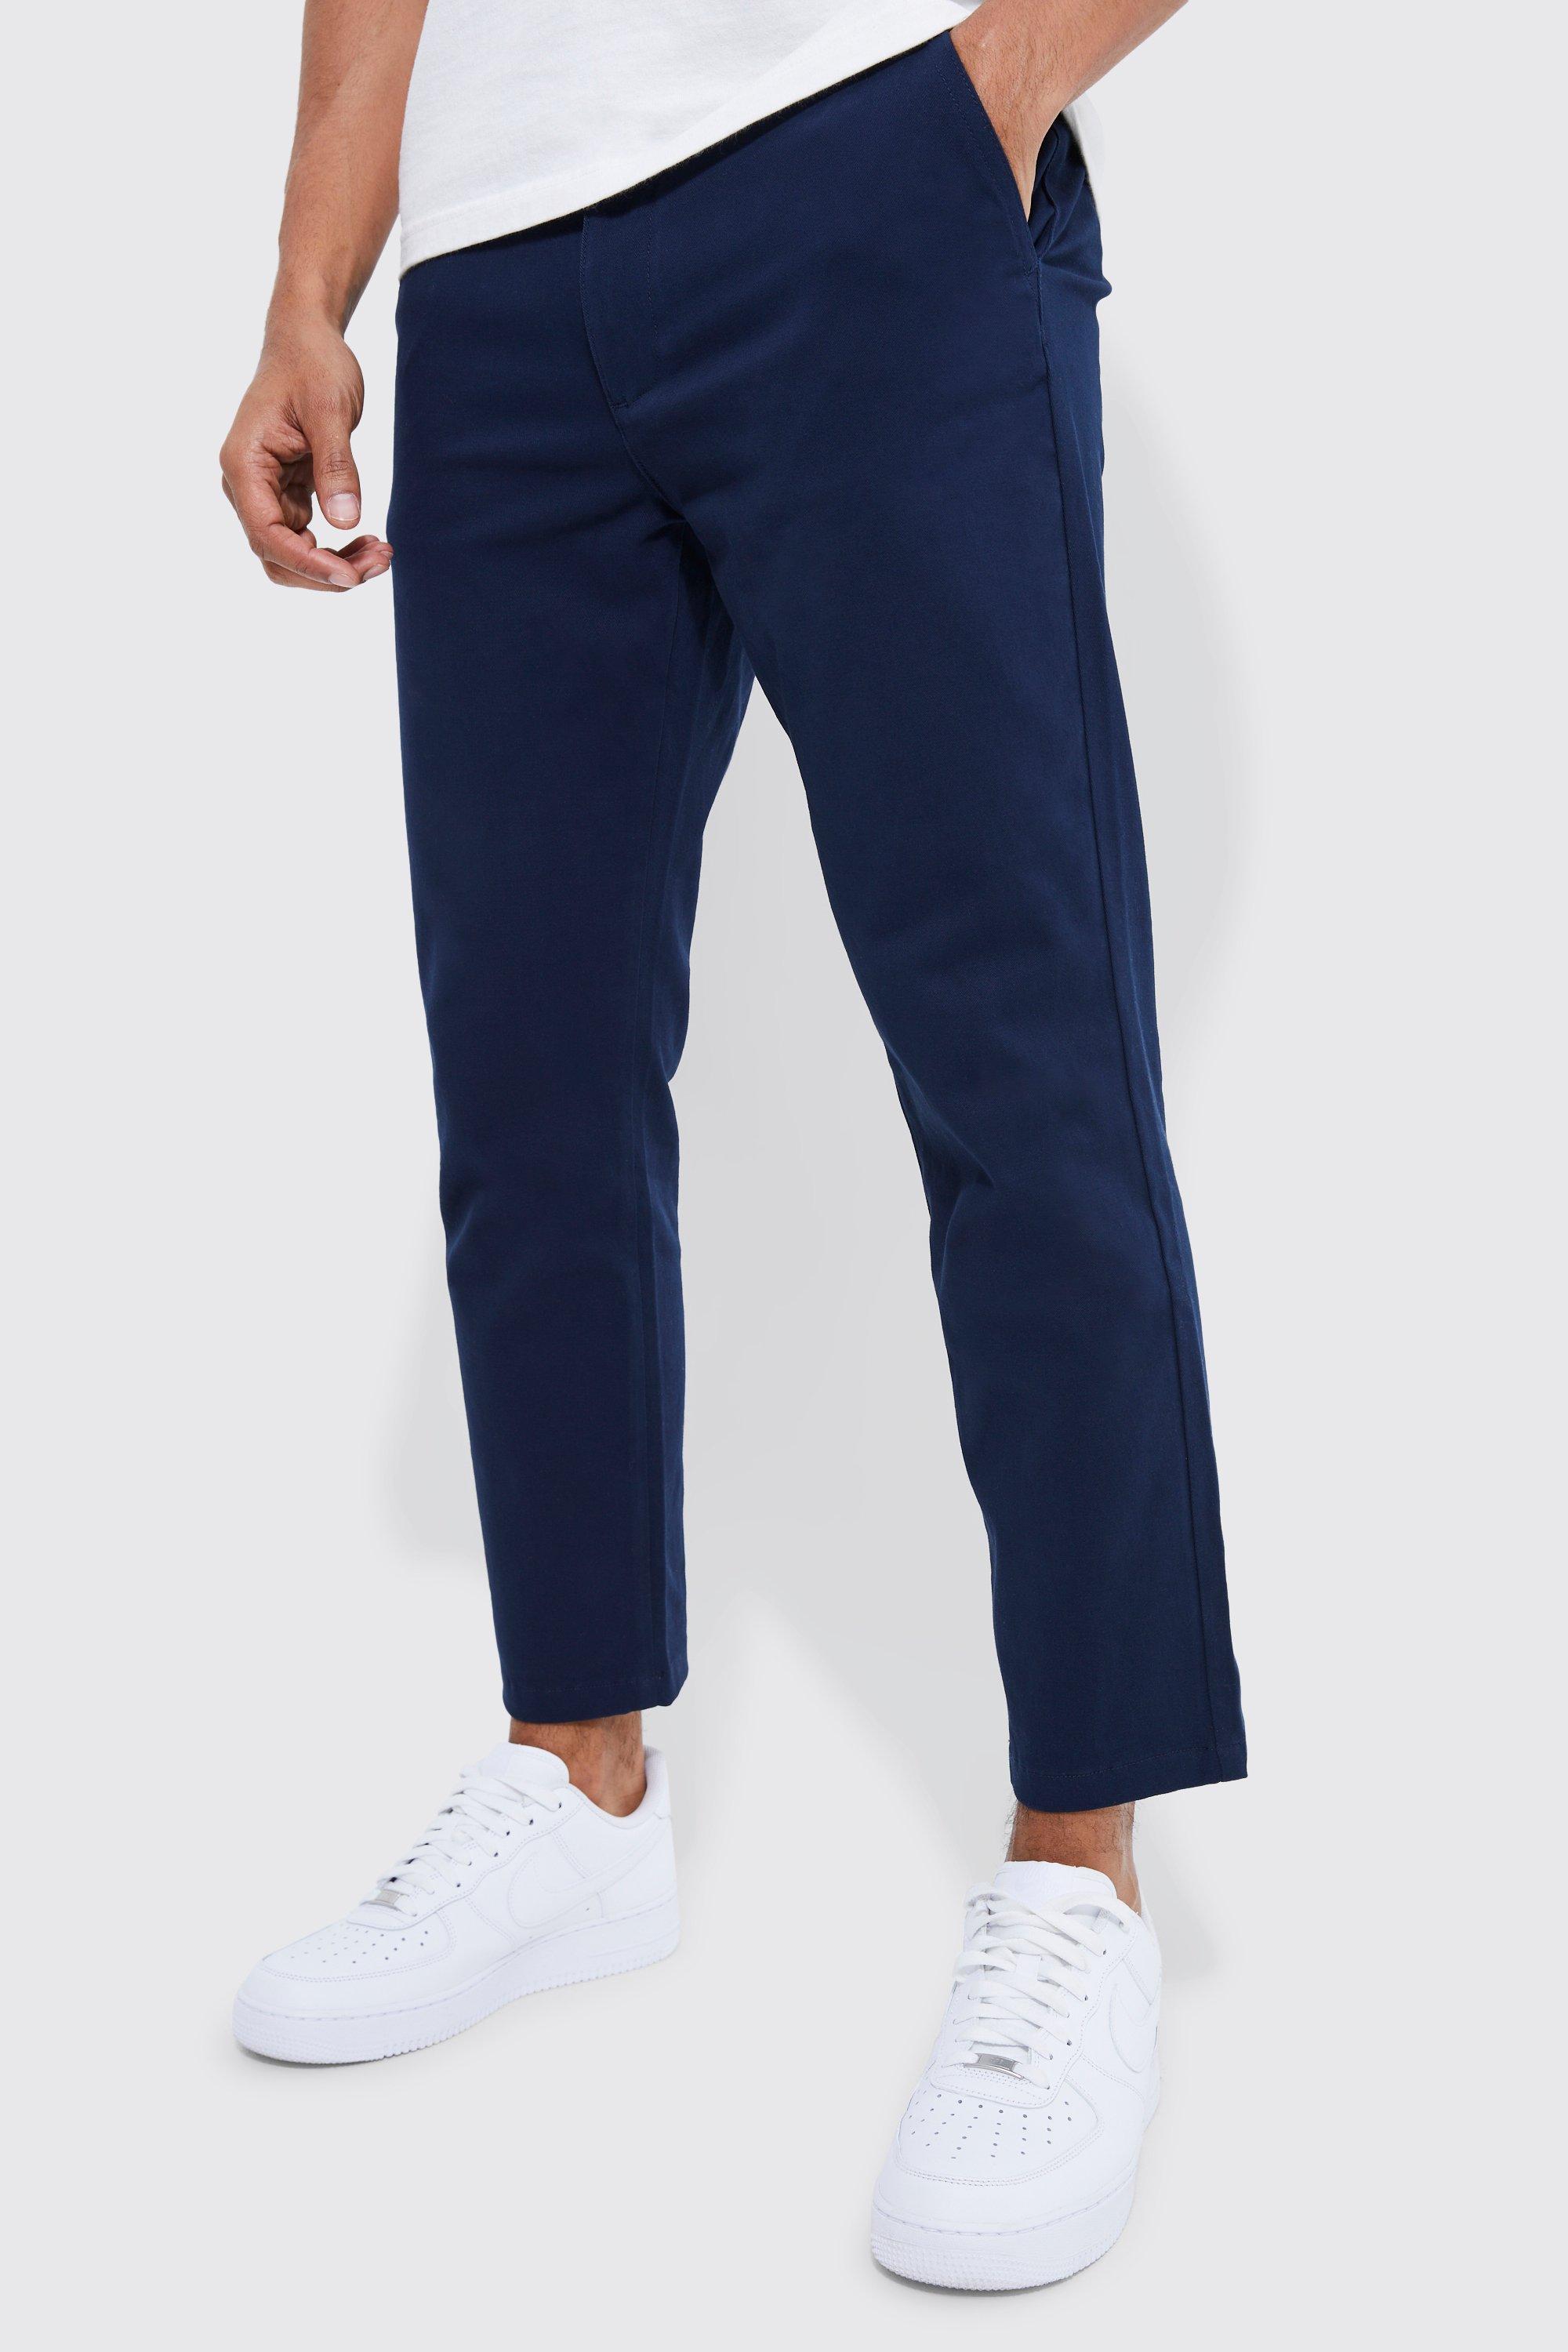 pantalon chino slim court homme - bleu - 28, bleu